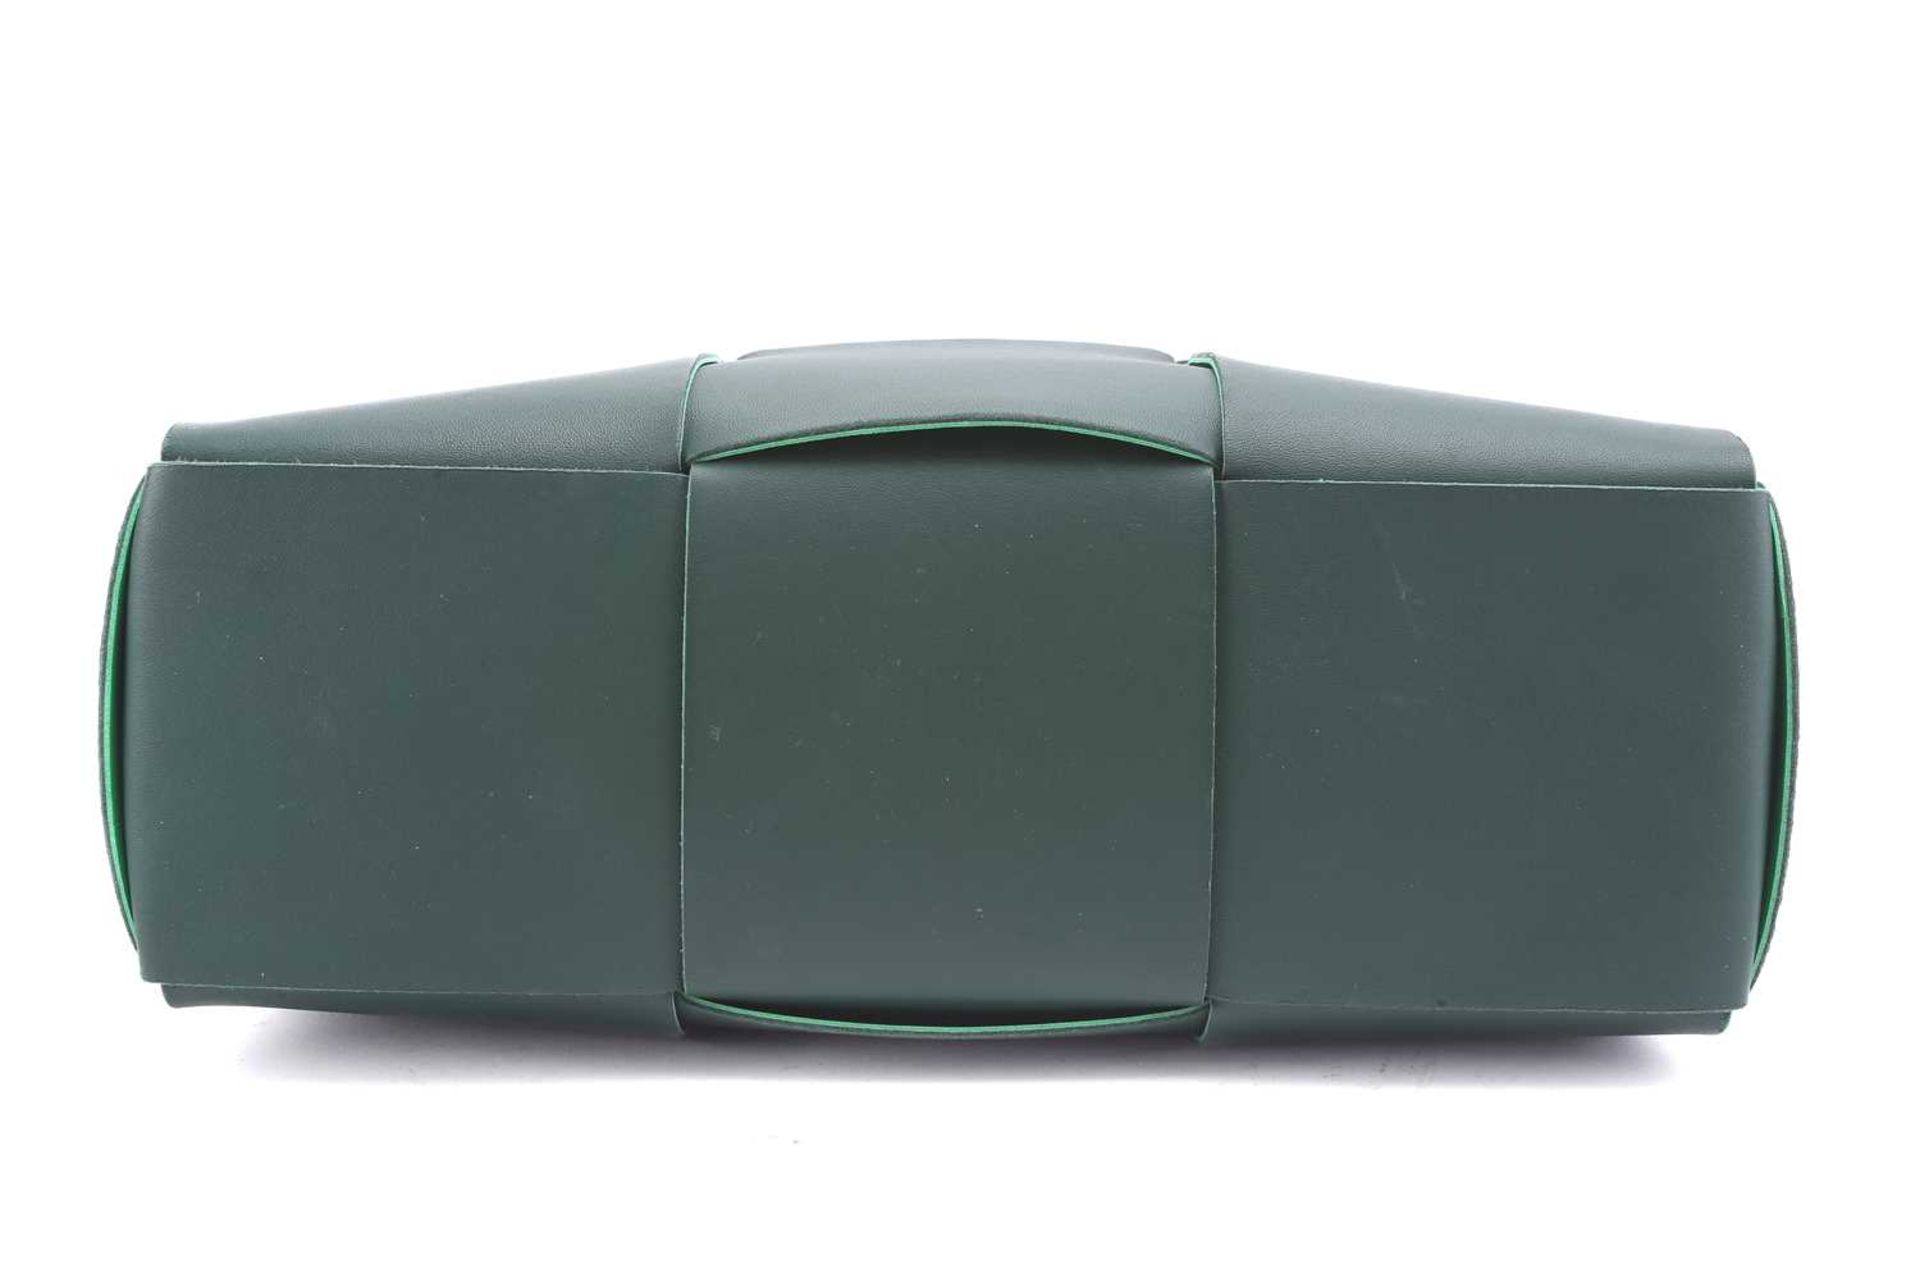 Bottega Veneta - a medium 'Arco' tote in hunter green and lime lambskin bonded leather, woven basket - Image 6 of 15